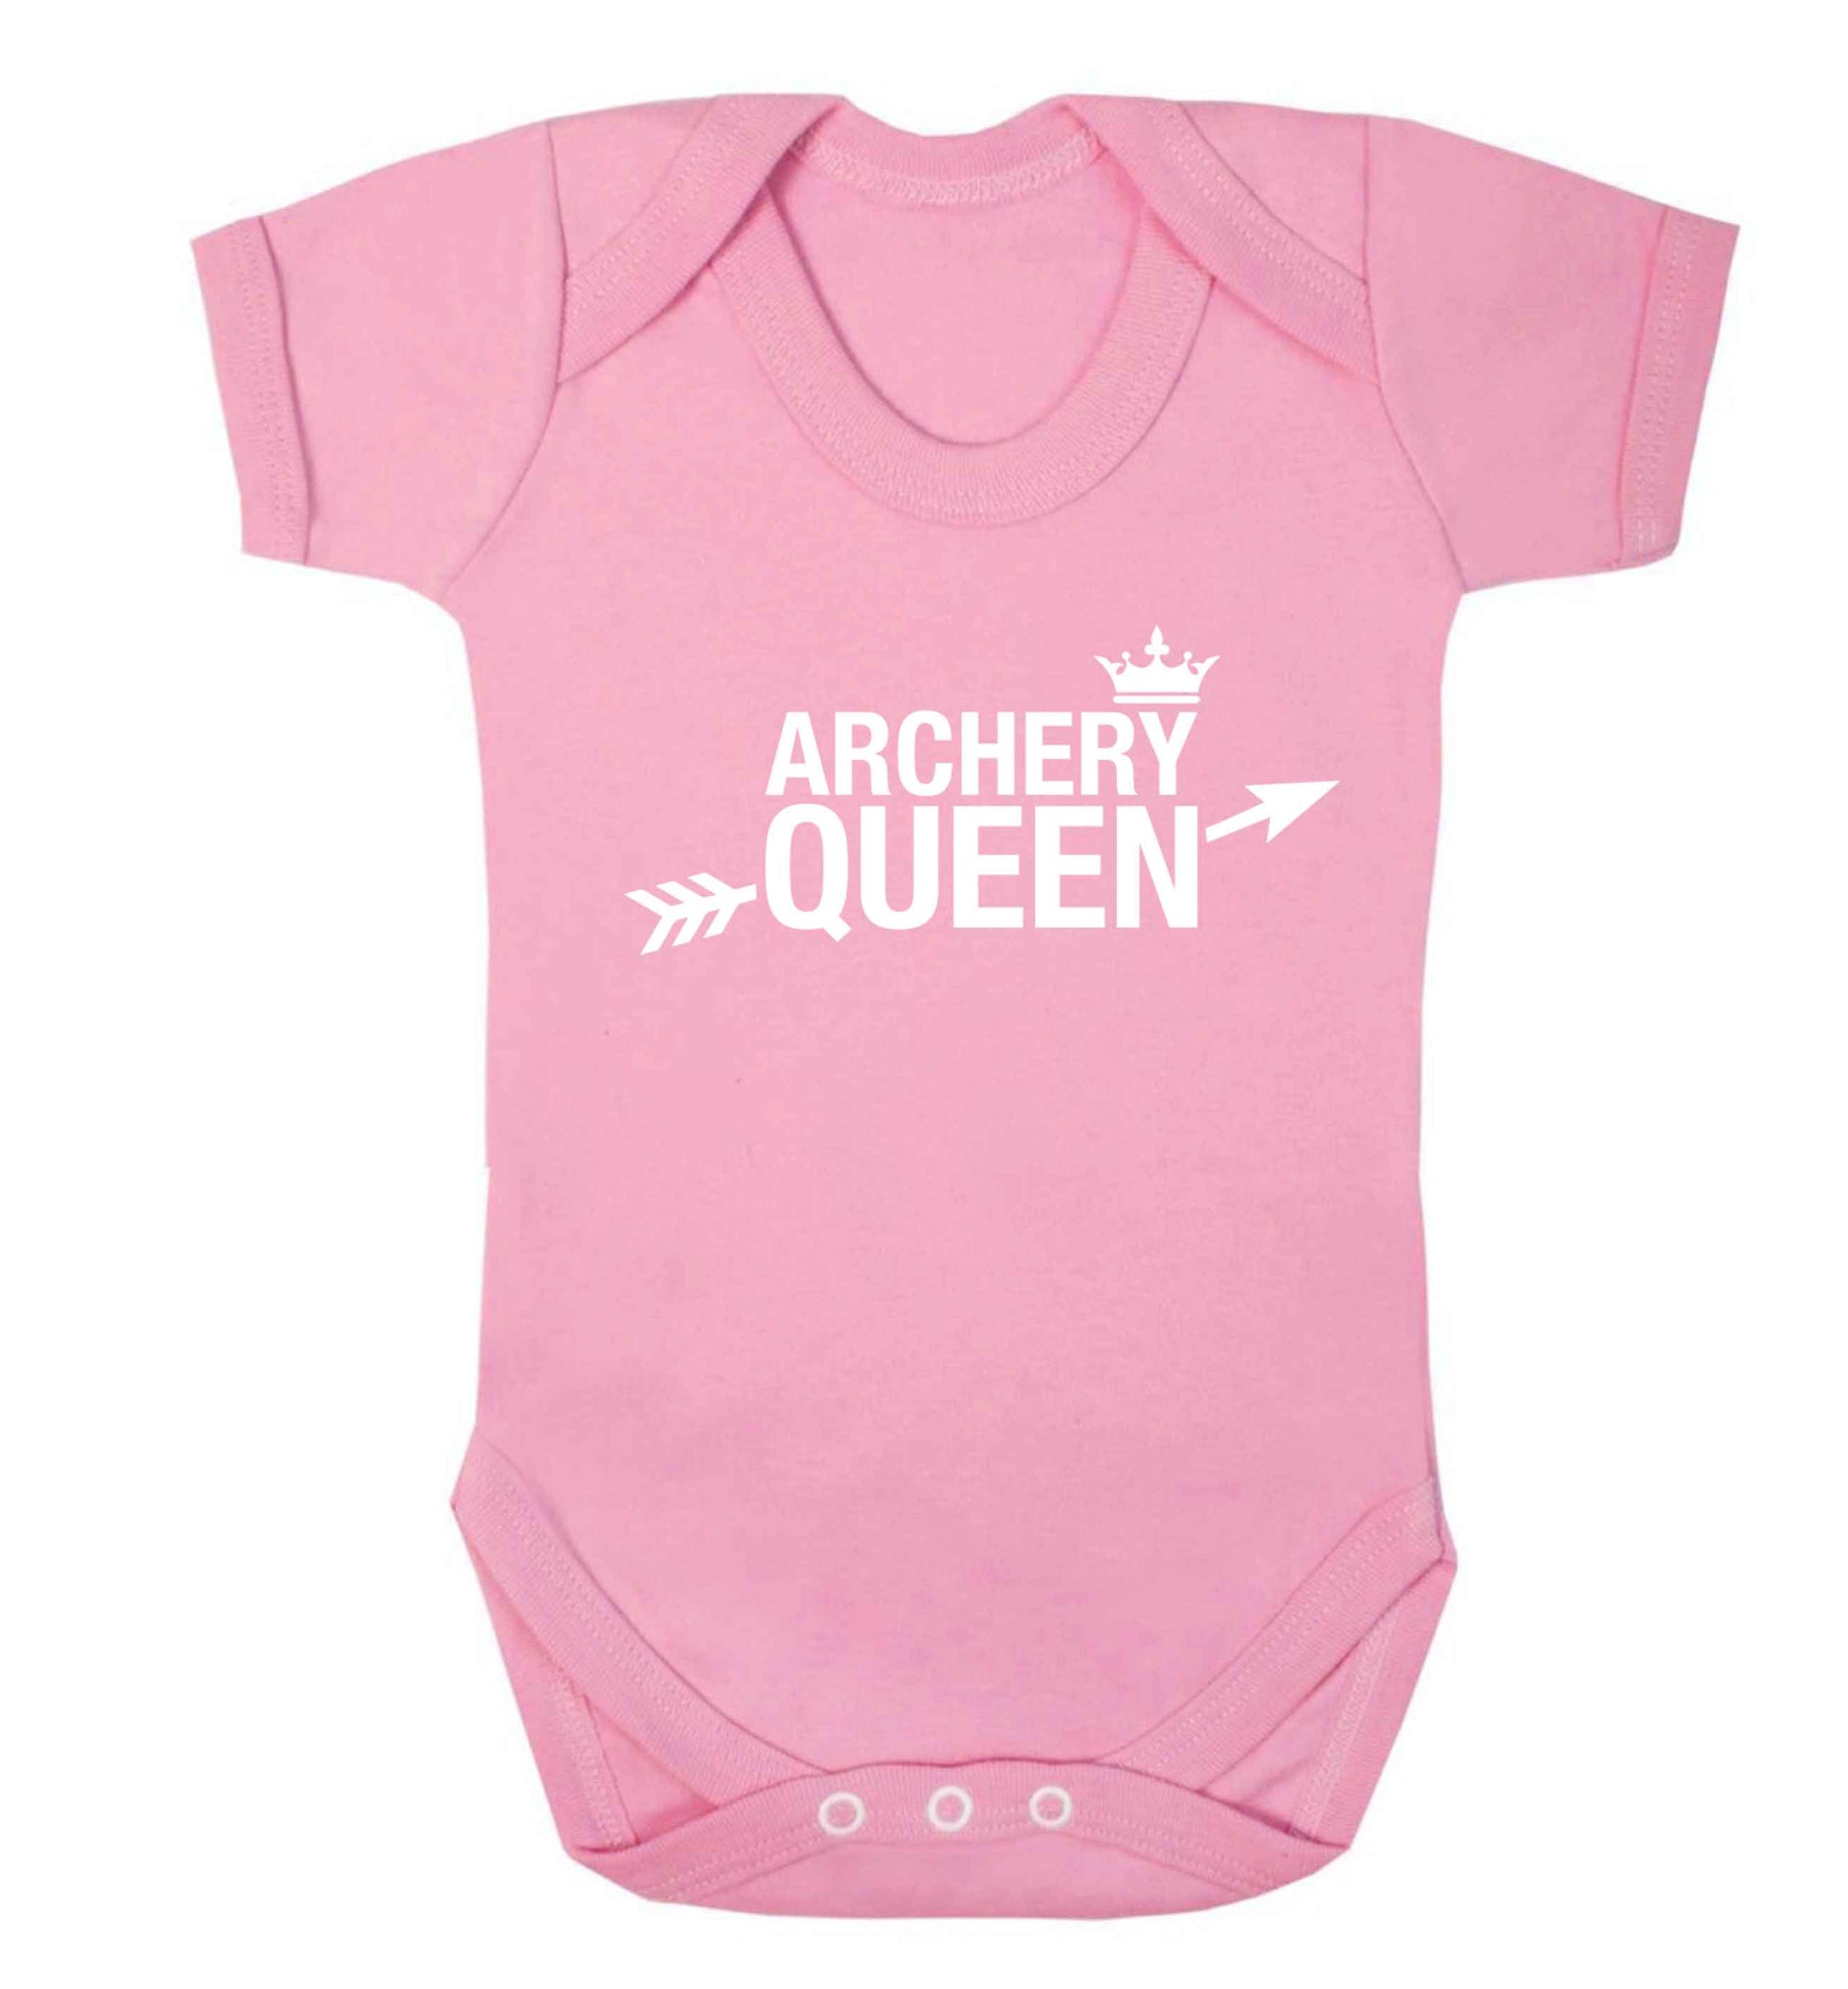 Archery queen Baby Vest pale pink 18-24 months